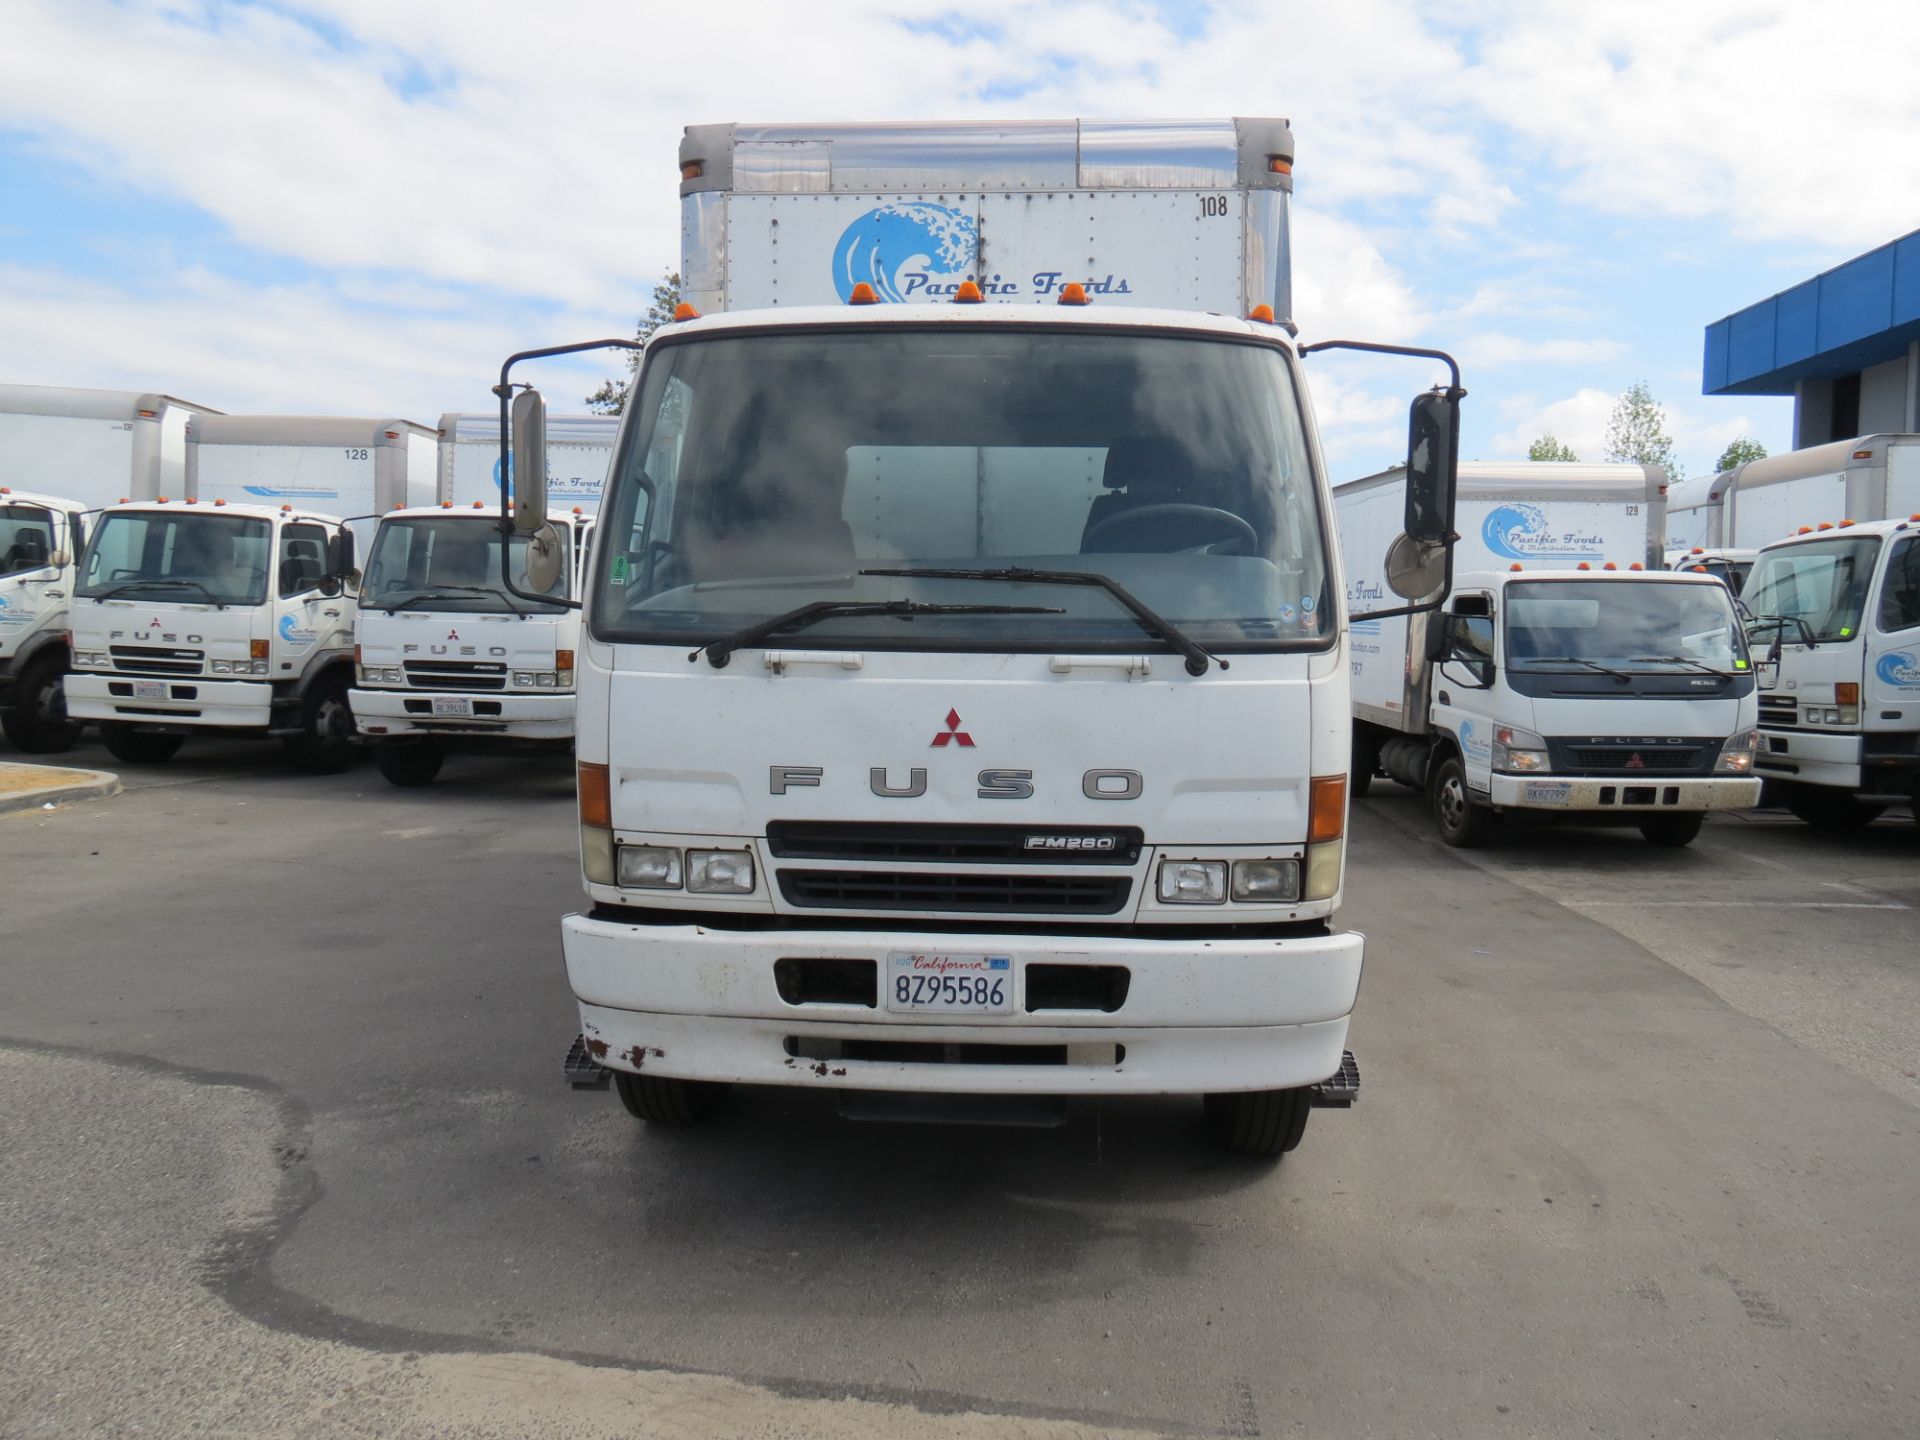 2007 Mitsubishi Fuso 28' FM-260 Box Truck W/Lift Gate, Manual Transmission, #108, VIN: